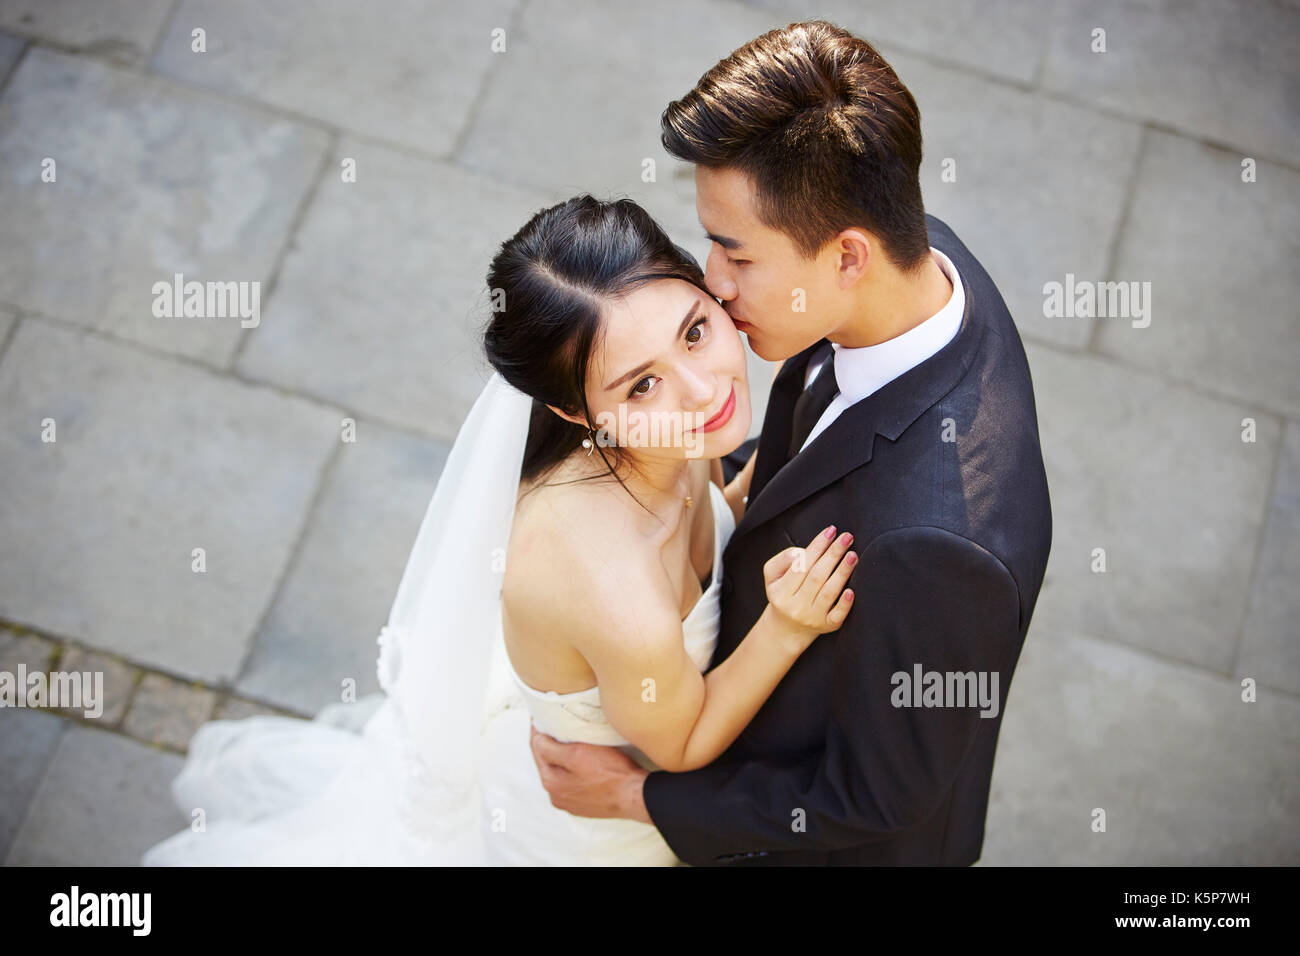 Junge asiatische Braut und Bräutigam umarmen Küssen tanzen in Open Air, hohe Blickwinkel betrachten. Stockfoto